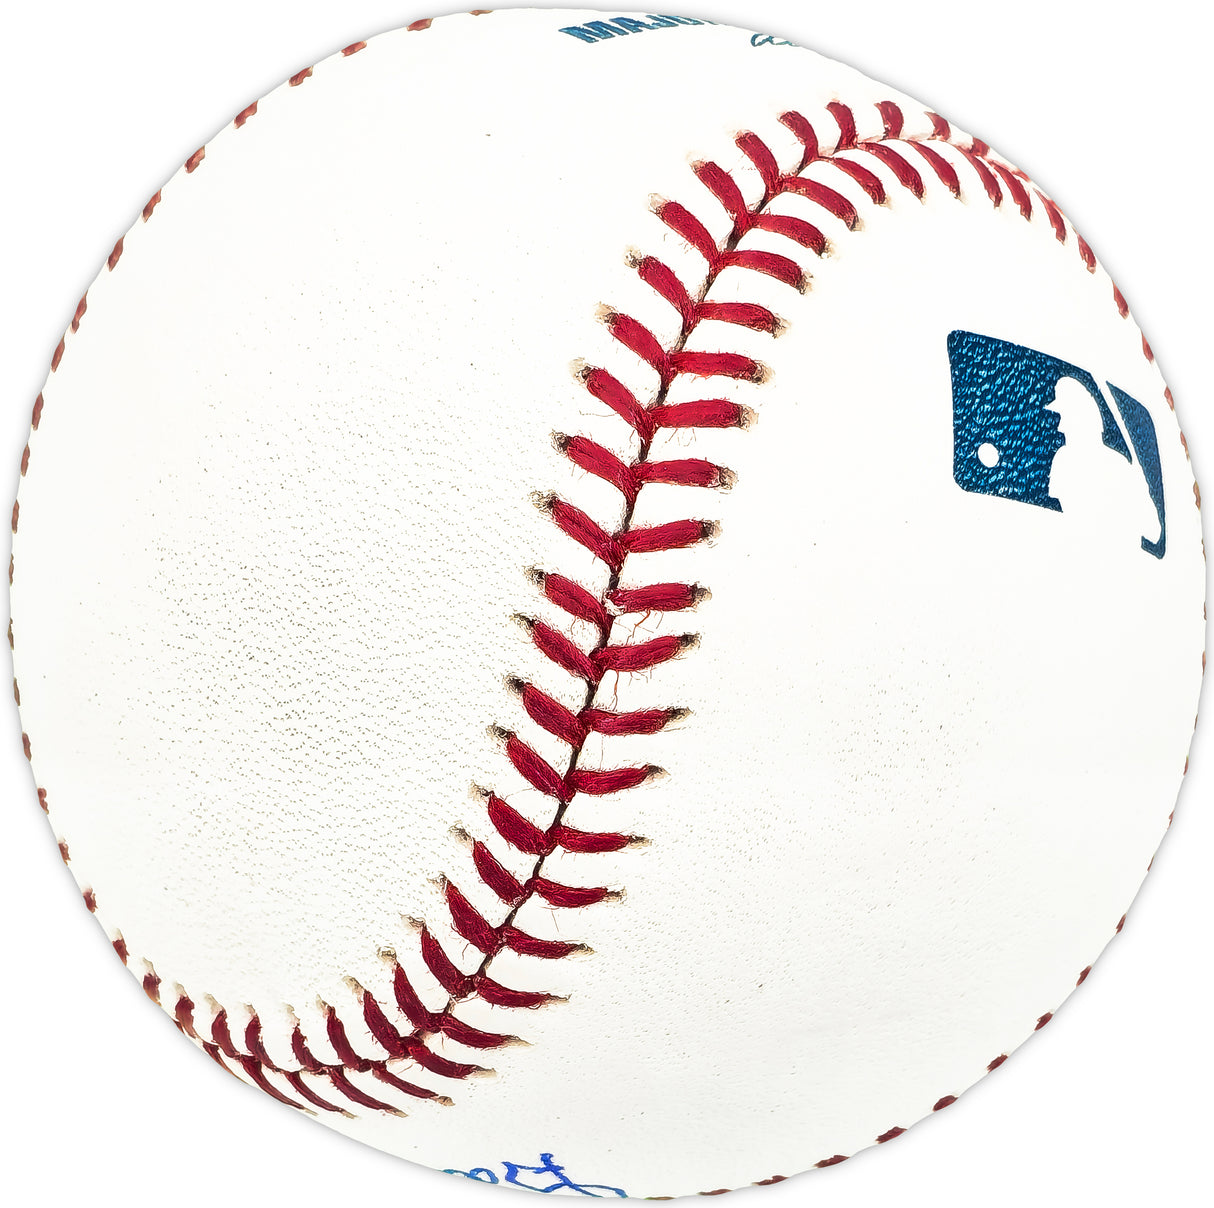 Gail Henley Autographed Official MLB Baseball Pittsburgh Pirates Beckett BAS QR #BM26016